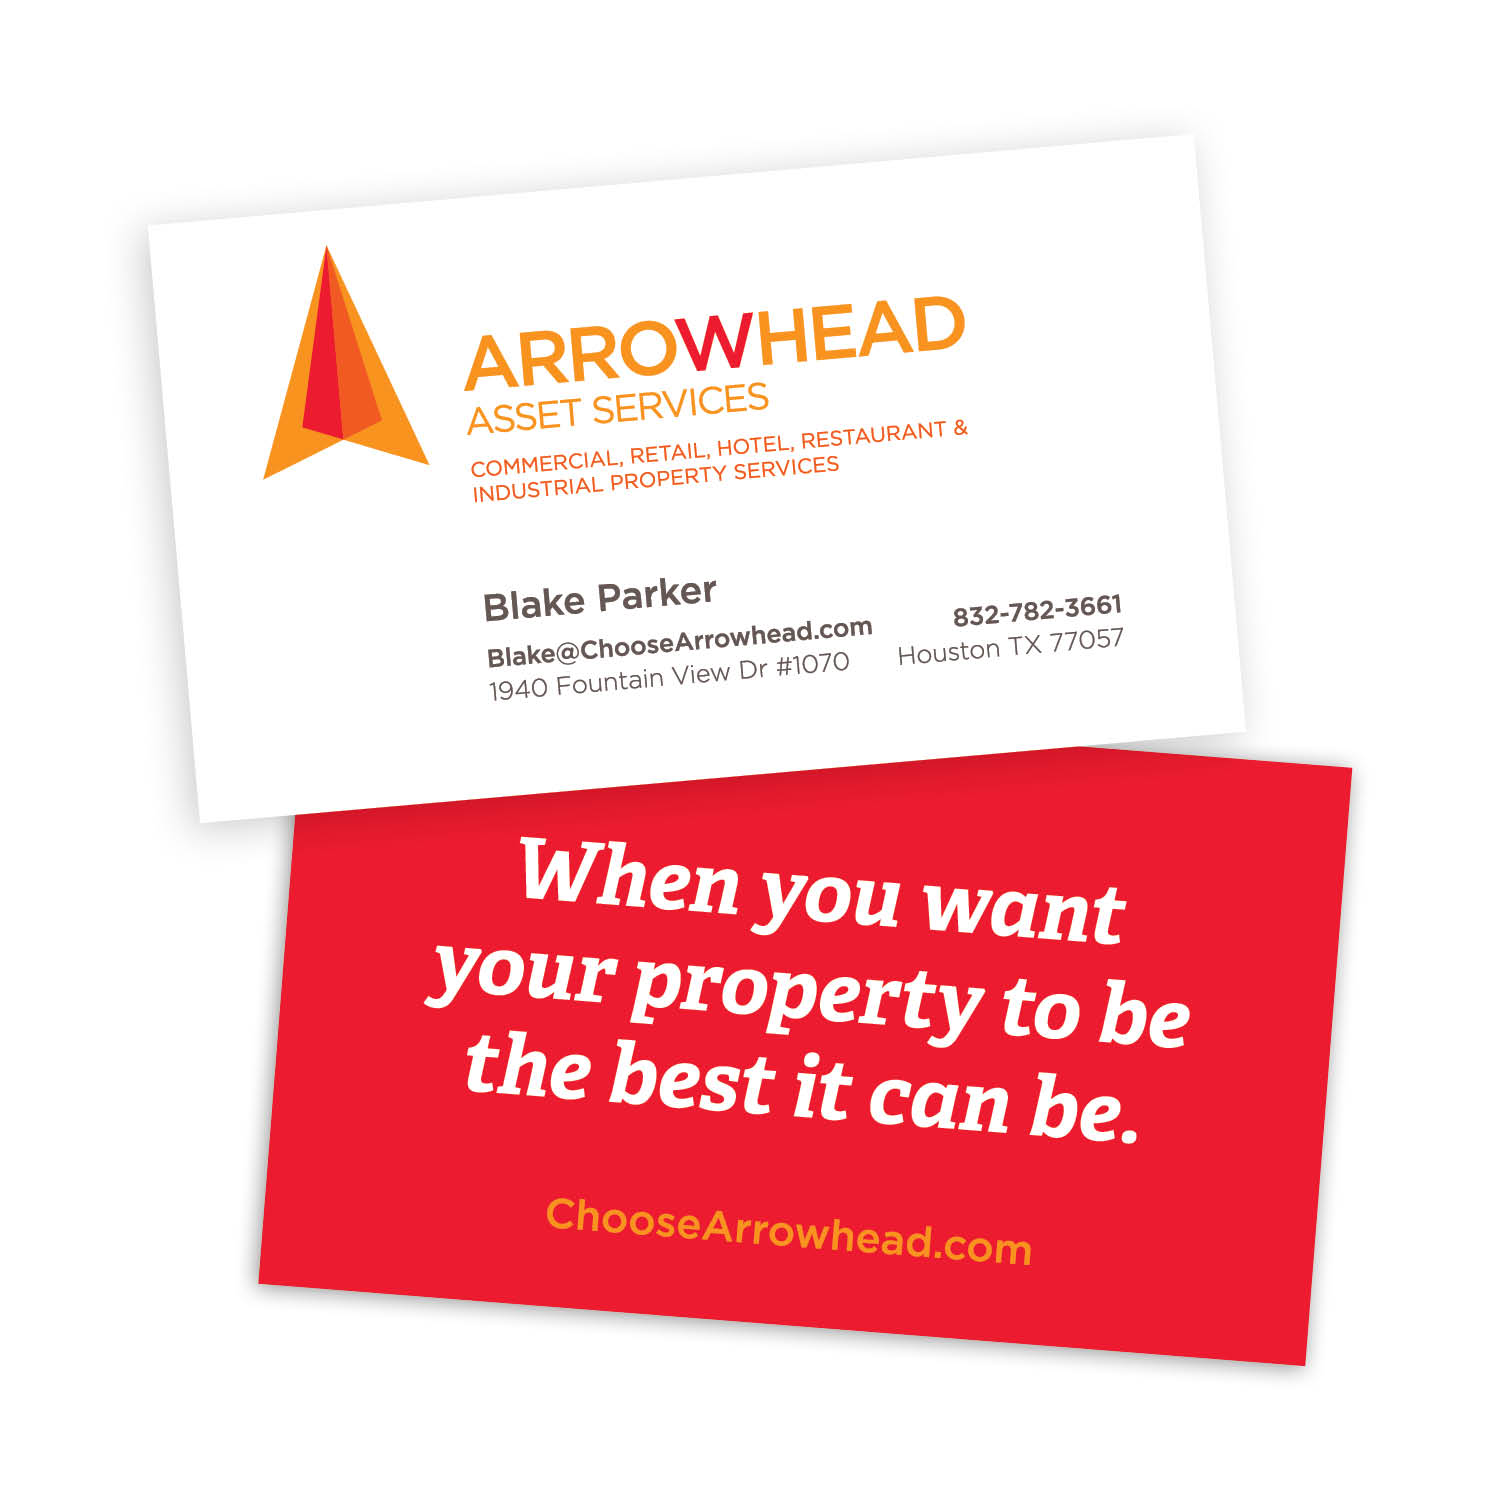 arrowhead asset services business cards